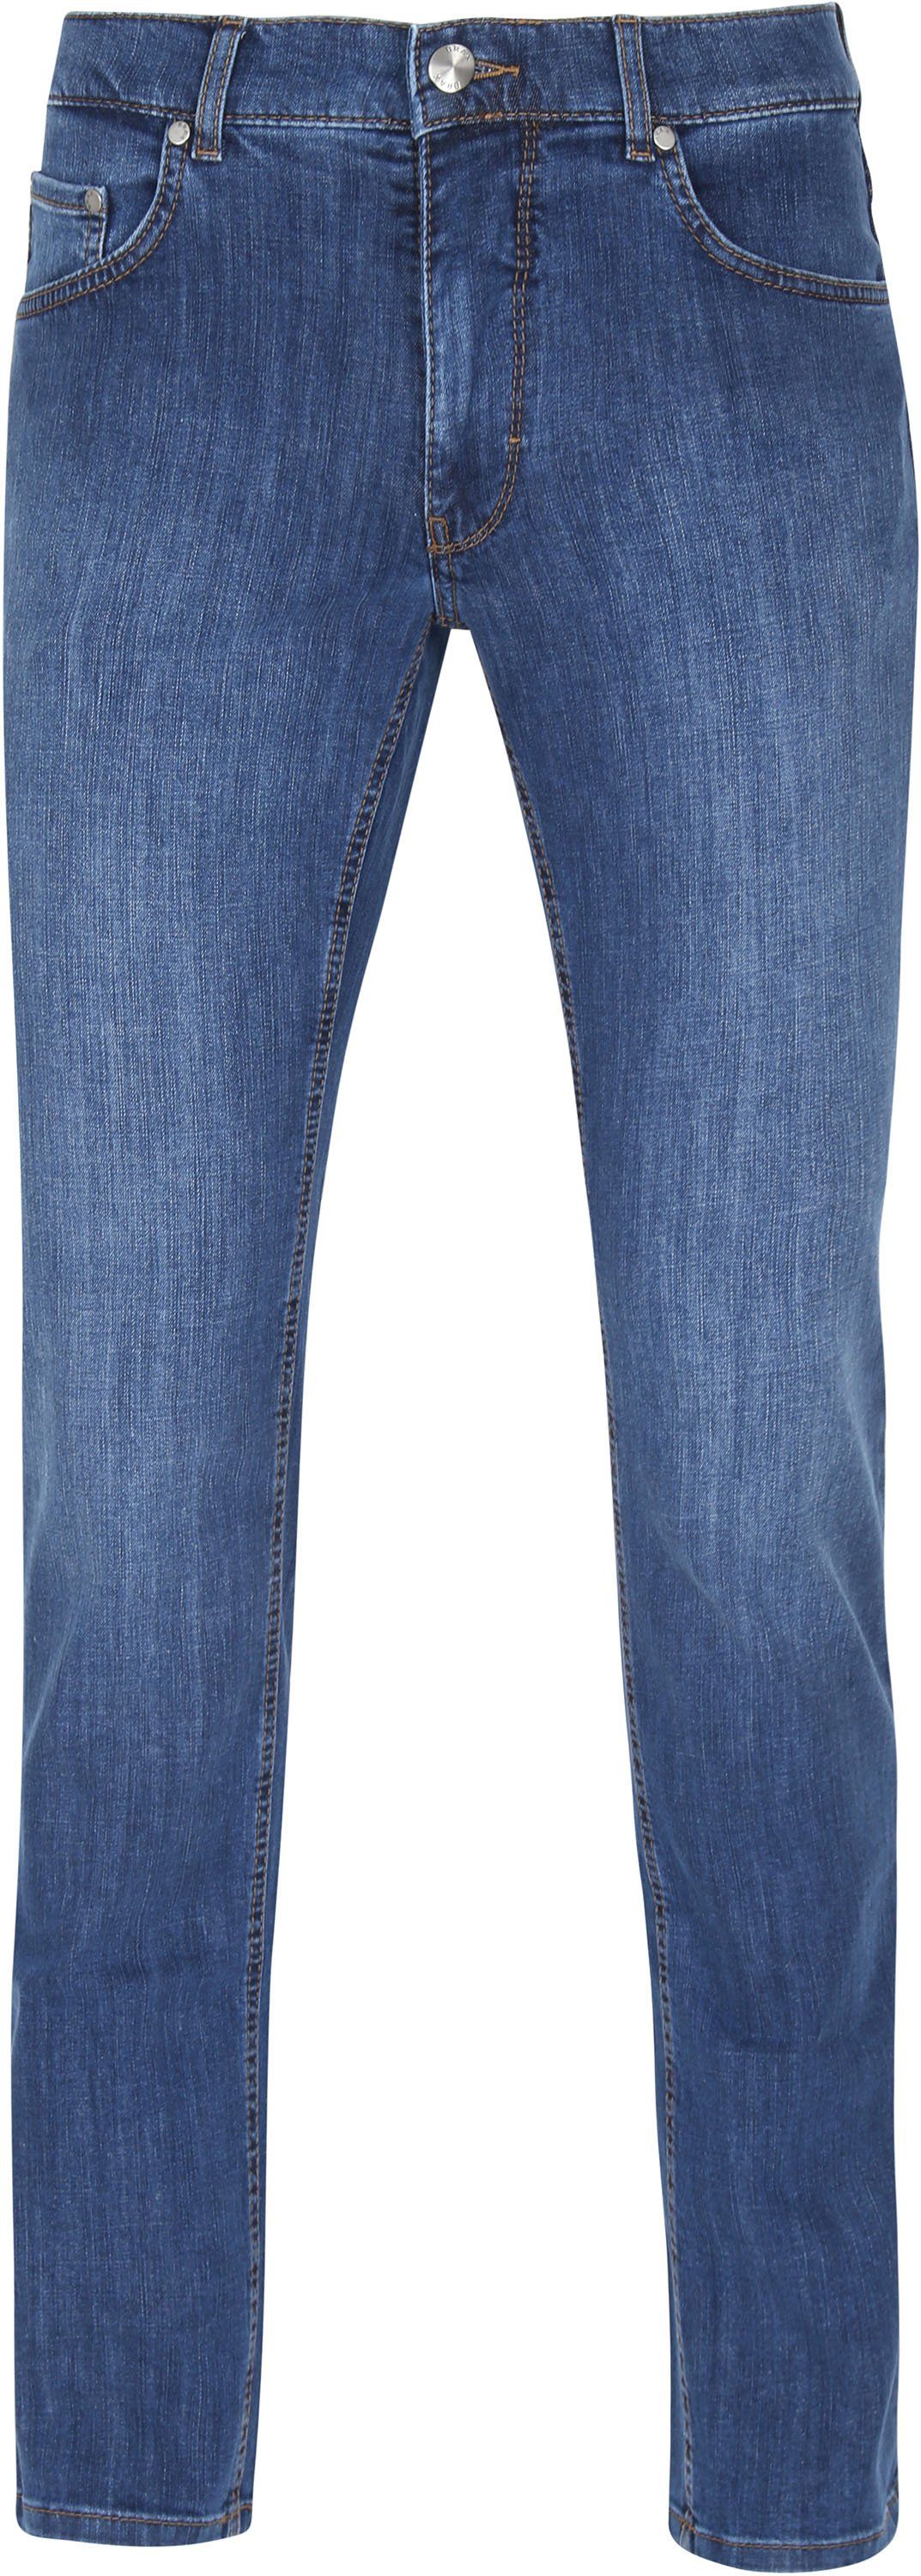 Brax Cooper Denim Jeans Five Pocket Blue size W 31